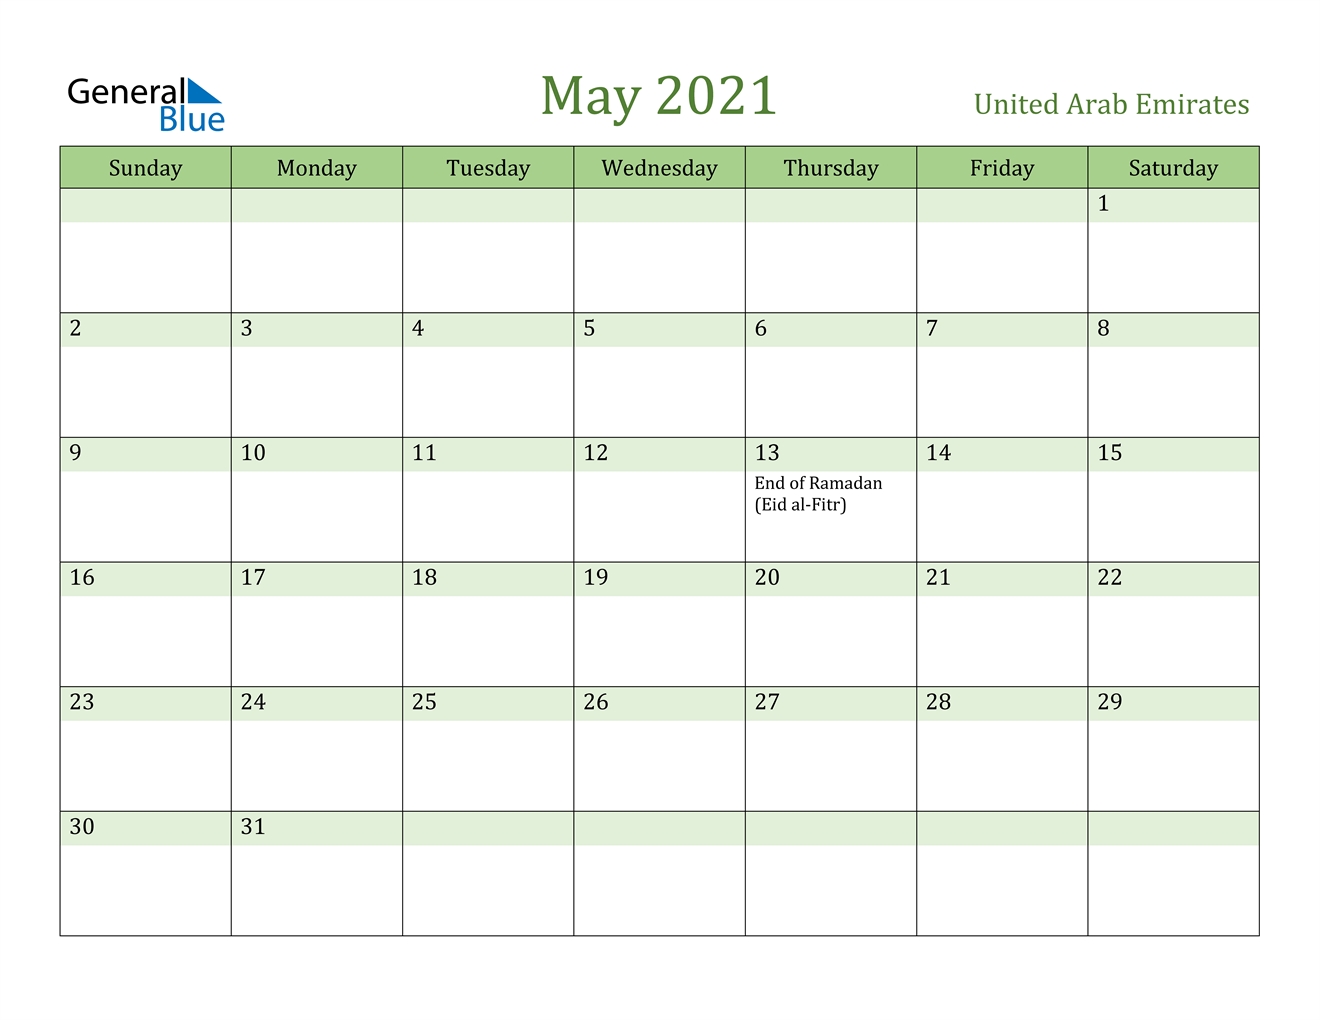 May 2021 Calendar - United Arab Emirates